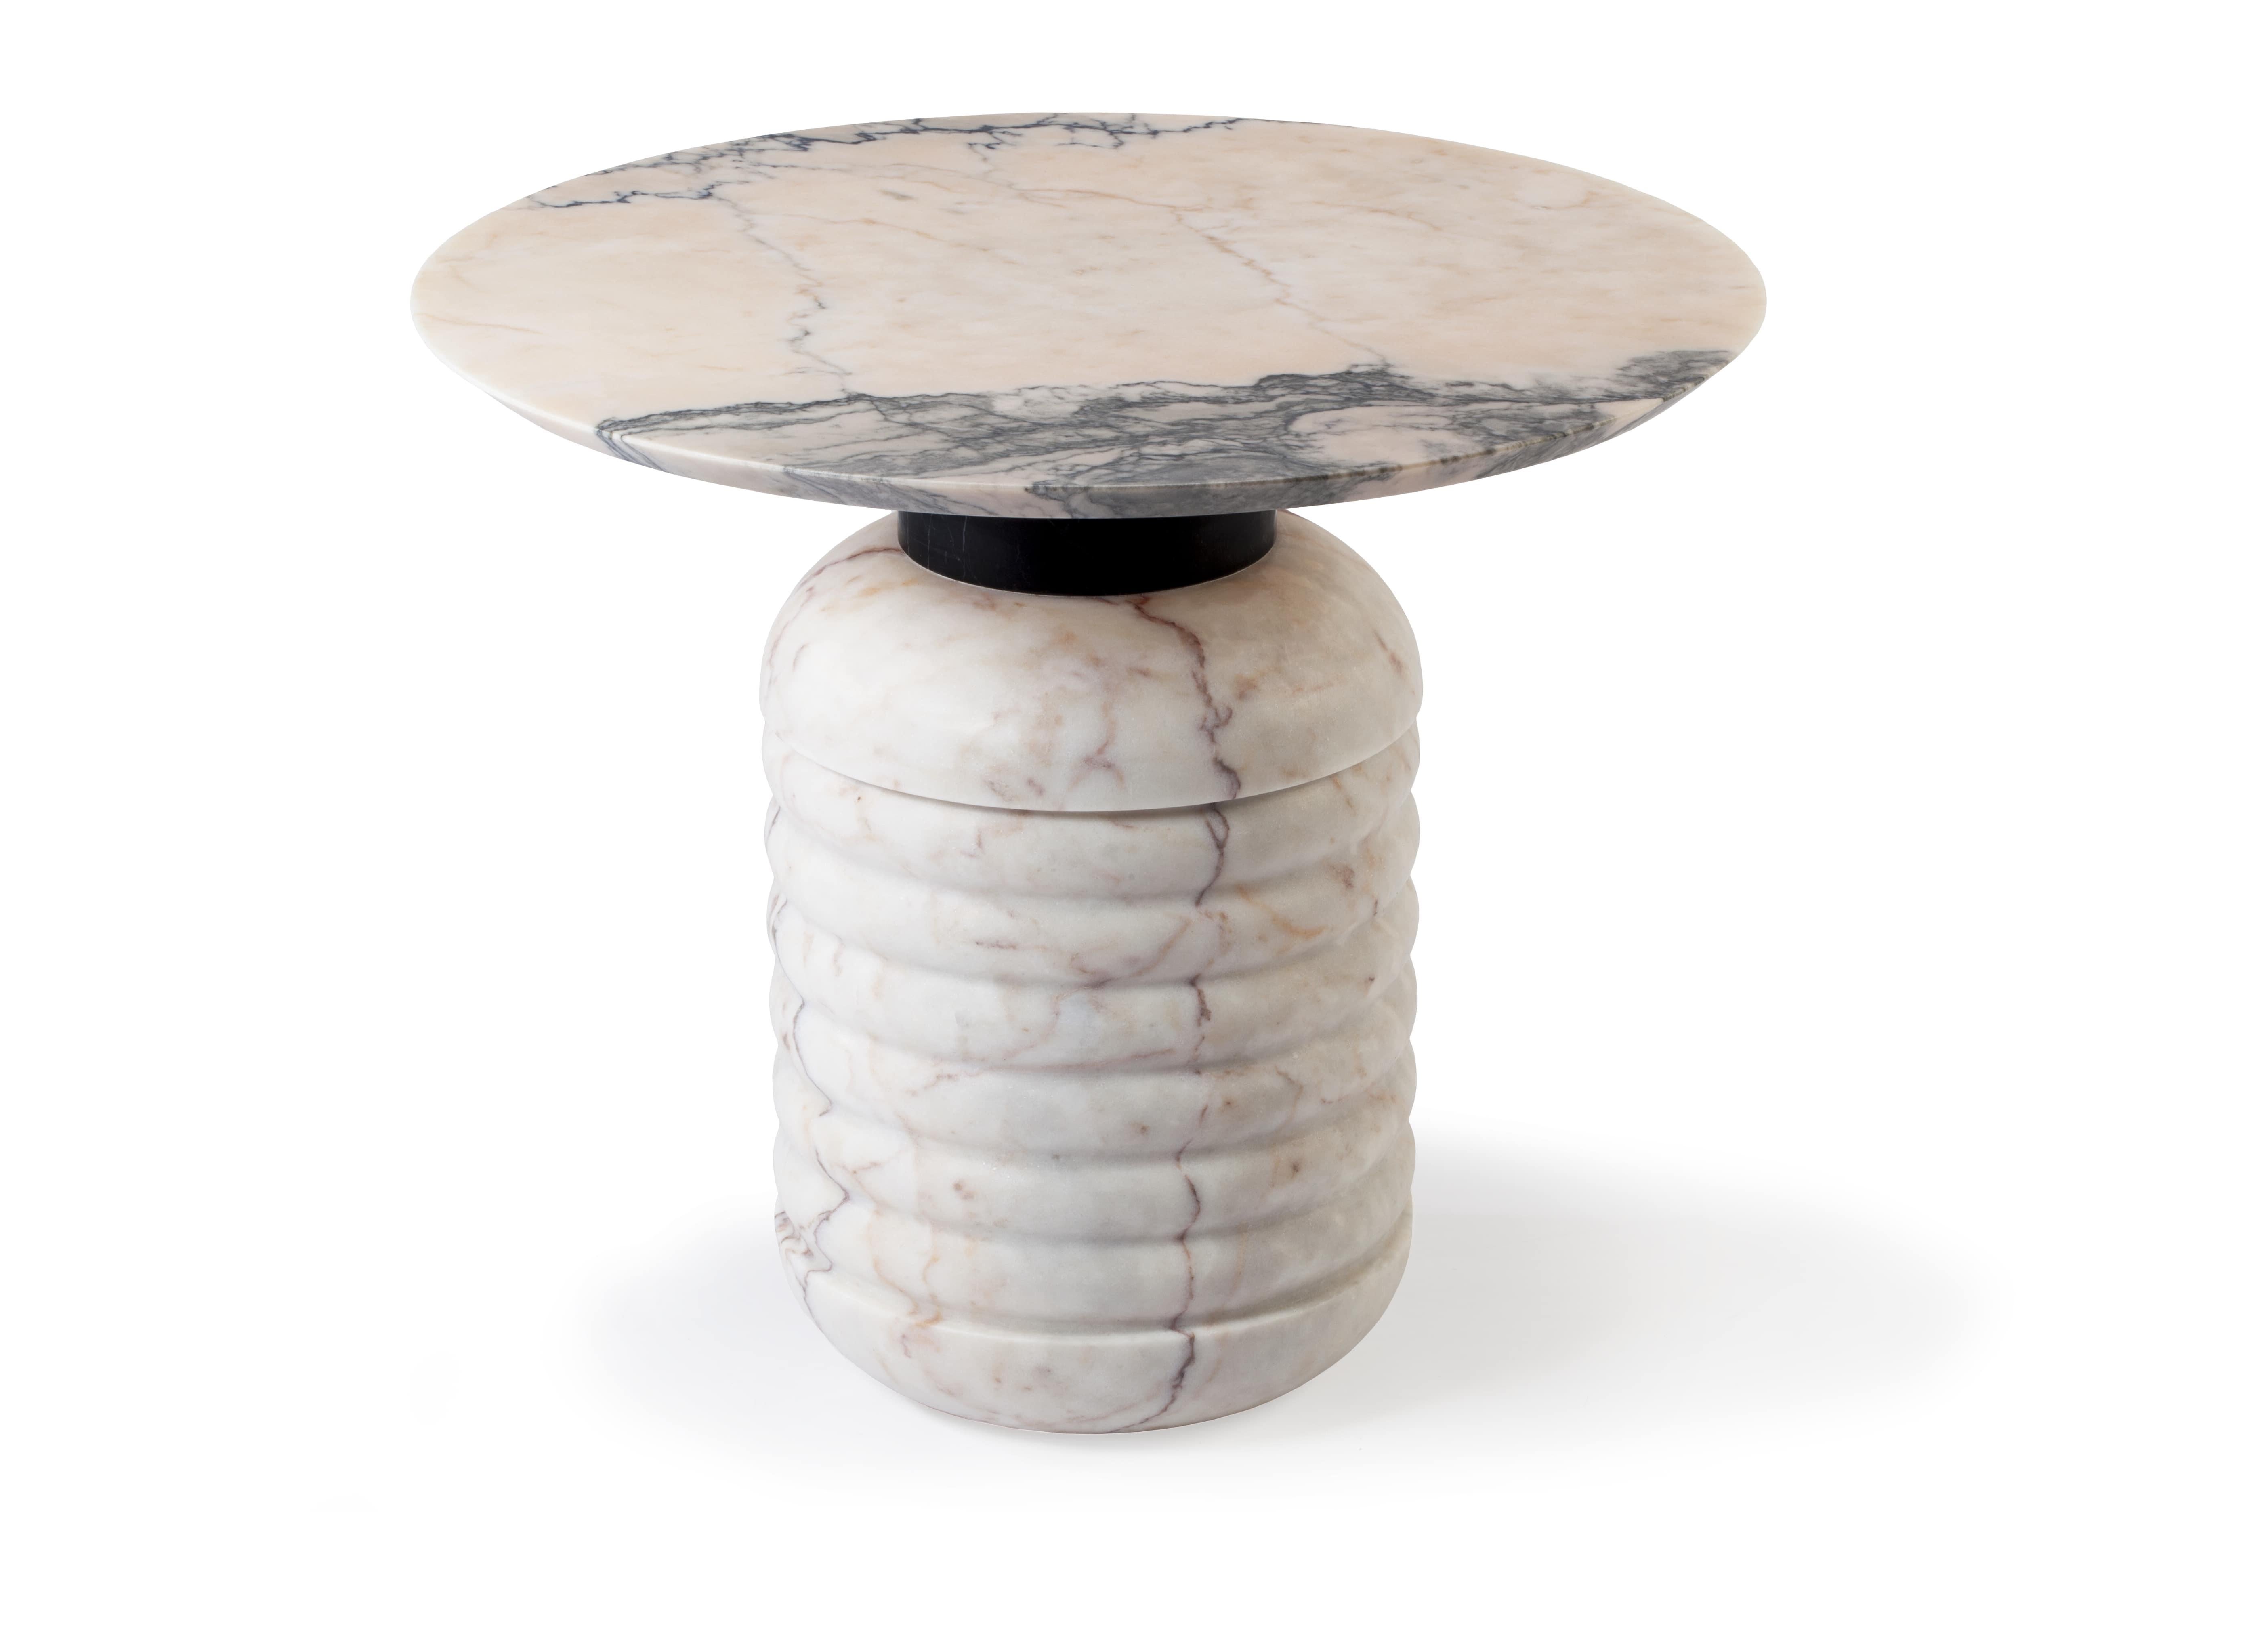 Marble contemporary jean coffee table
Dimensions: H 52 cm x Ø 60cm
Materials: Top: estremoz, Nero marquina, Verde Guatemala, estremoz
Middle part: estremoz, Nero marquina, estremoz
Base: estremoz marble.
 




  